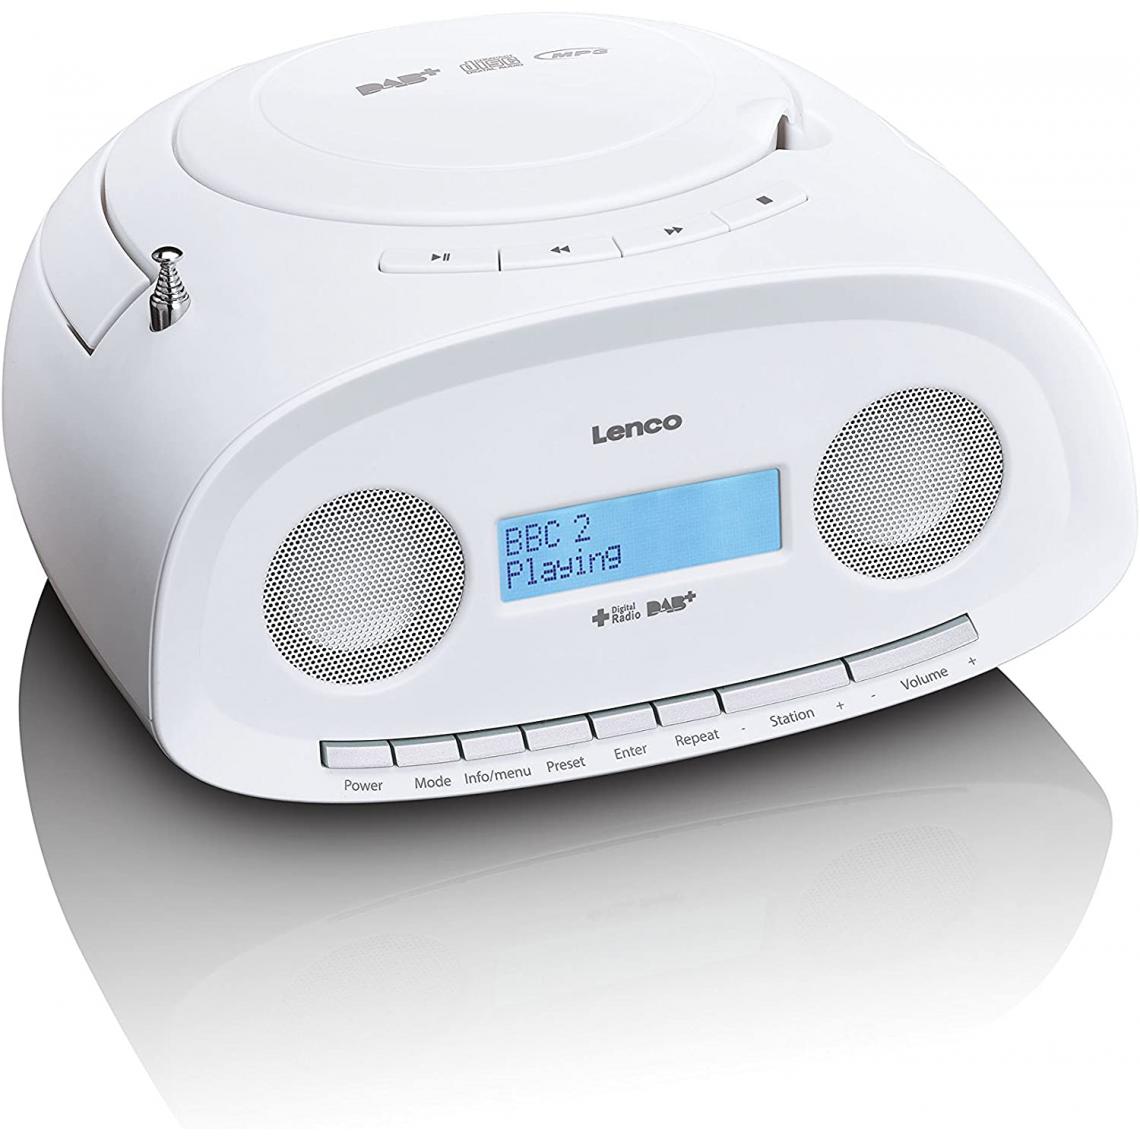 Lenco - radio portable DAB DAB+ FM AM PLL et lecteur CD USB blanc - Radio, lecteur CD/MP3 enfant